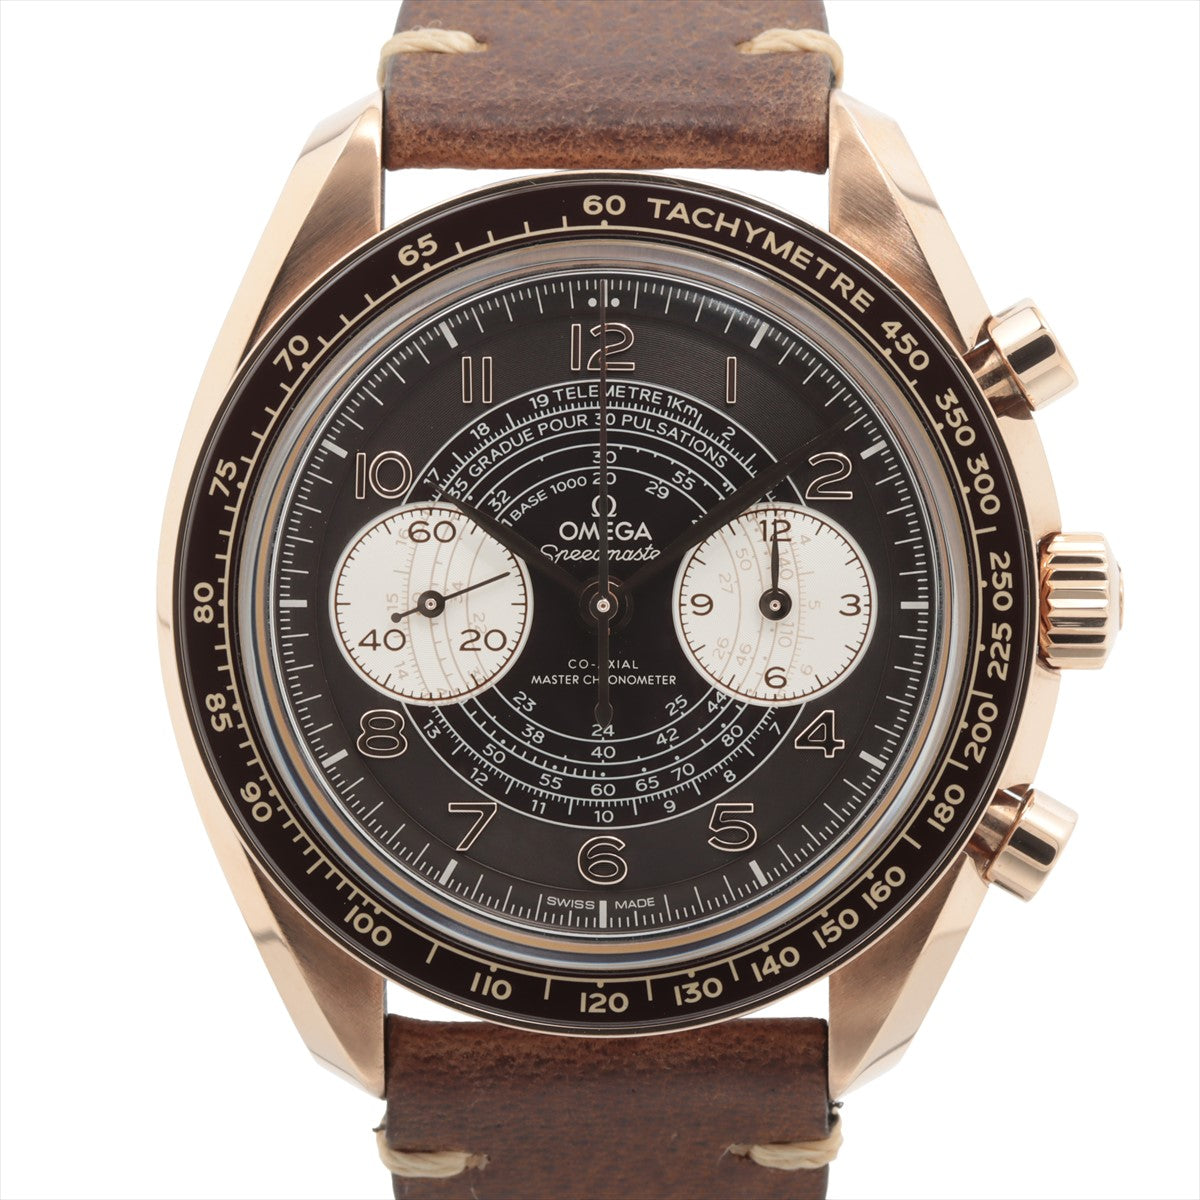 Omega Speedmaster Chronoscope Coaxial Master chronometer 329.92.43.51.10.001 Bronze x external leather Stem-winder Black-Face